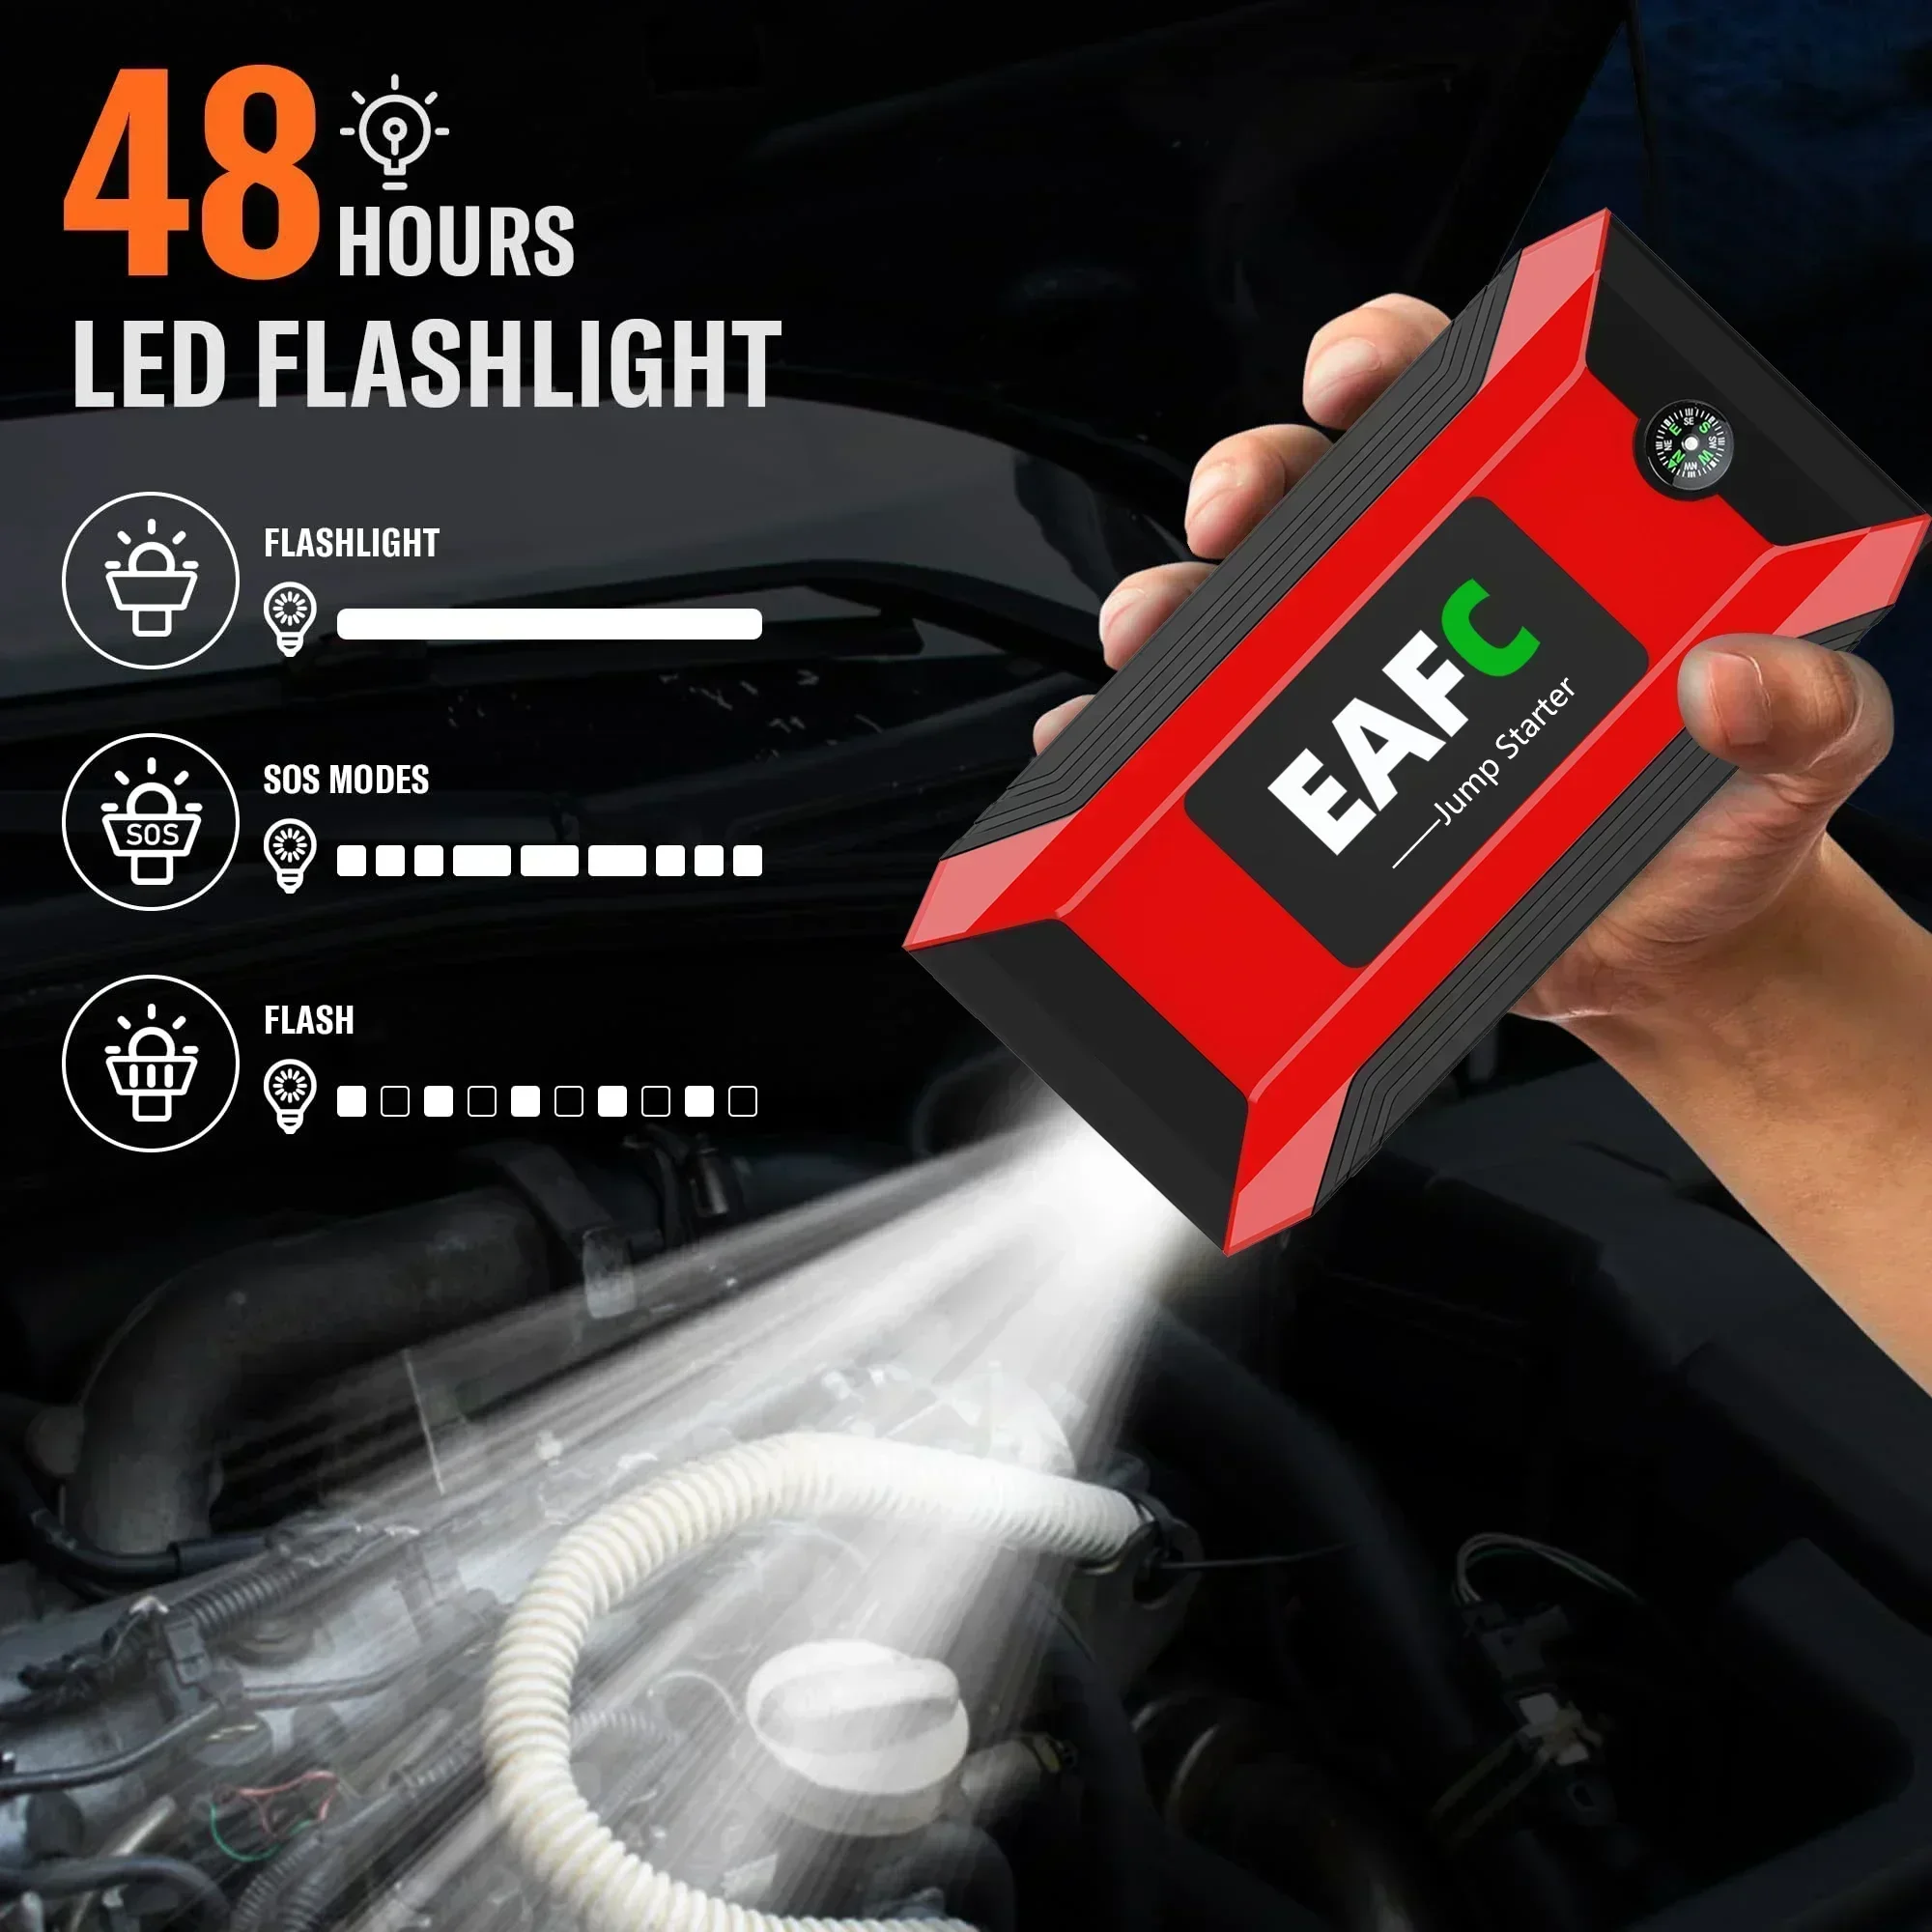 EAFC 12V Auto Starthilfe Power Bank Tragbare Auto Batterie Booster  ChargerStarting Gerät Auto Notfall Start-up Beleuchtung